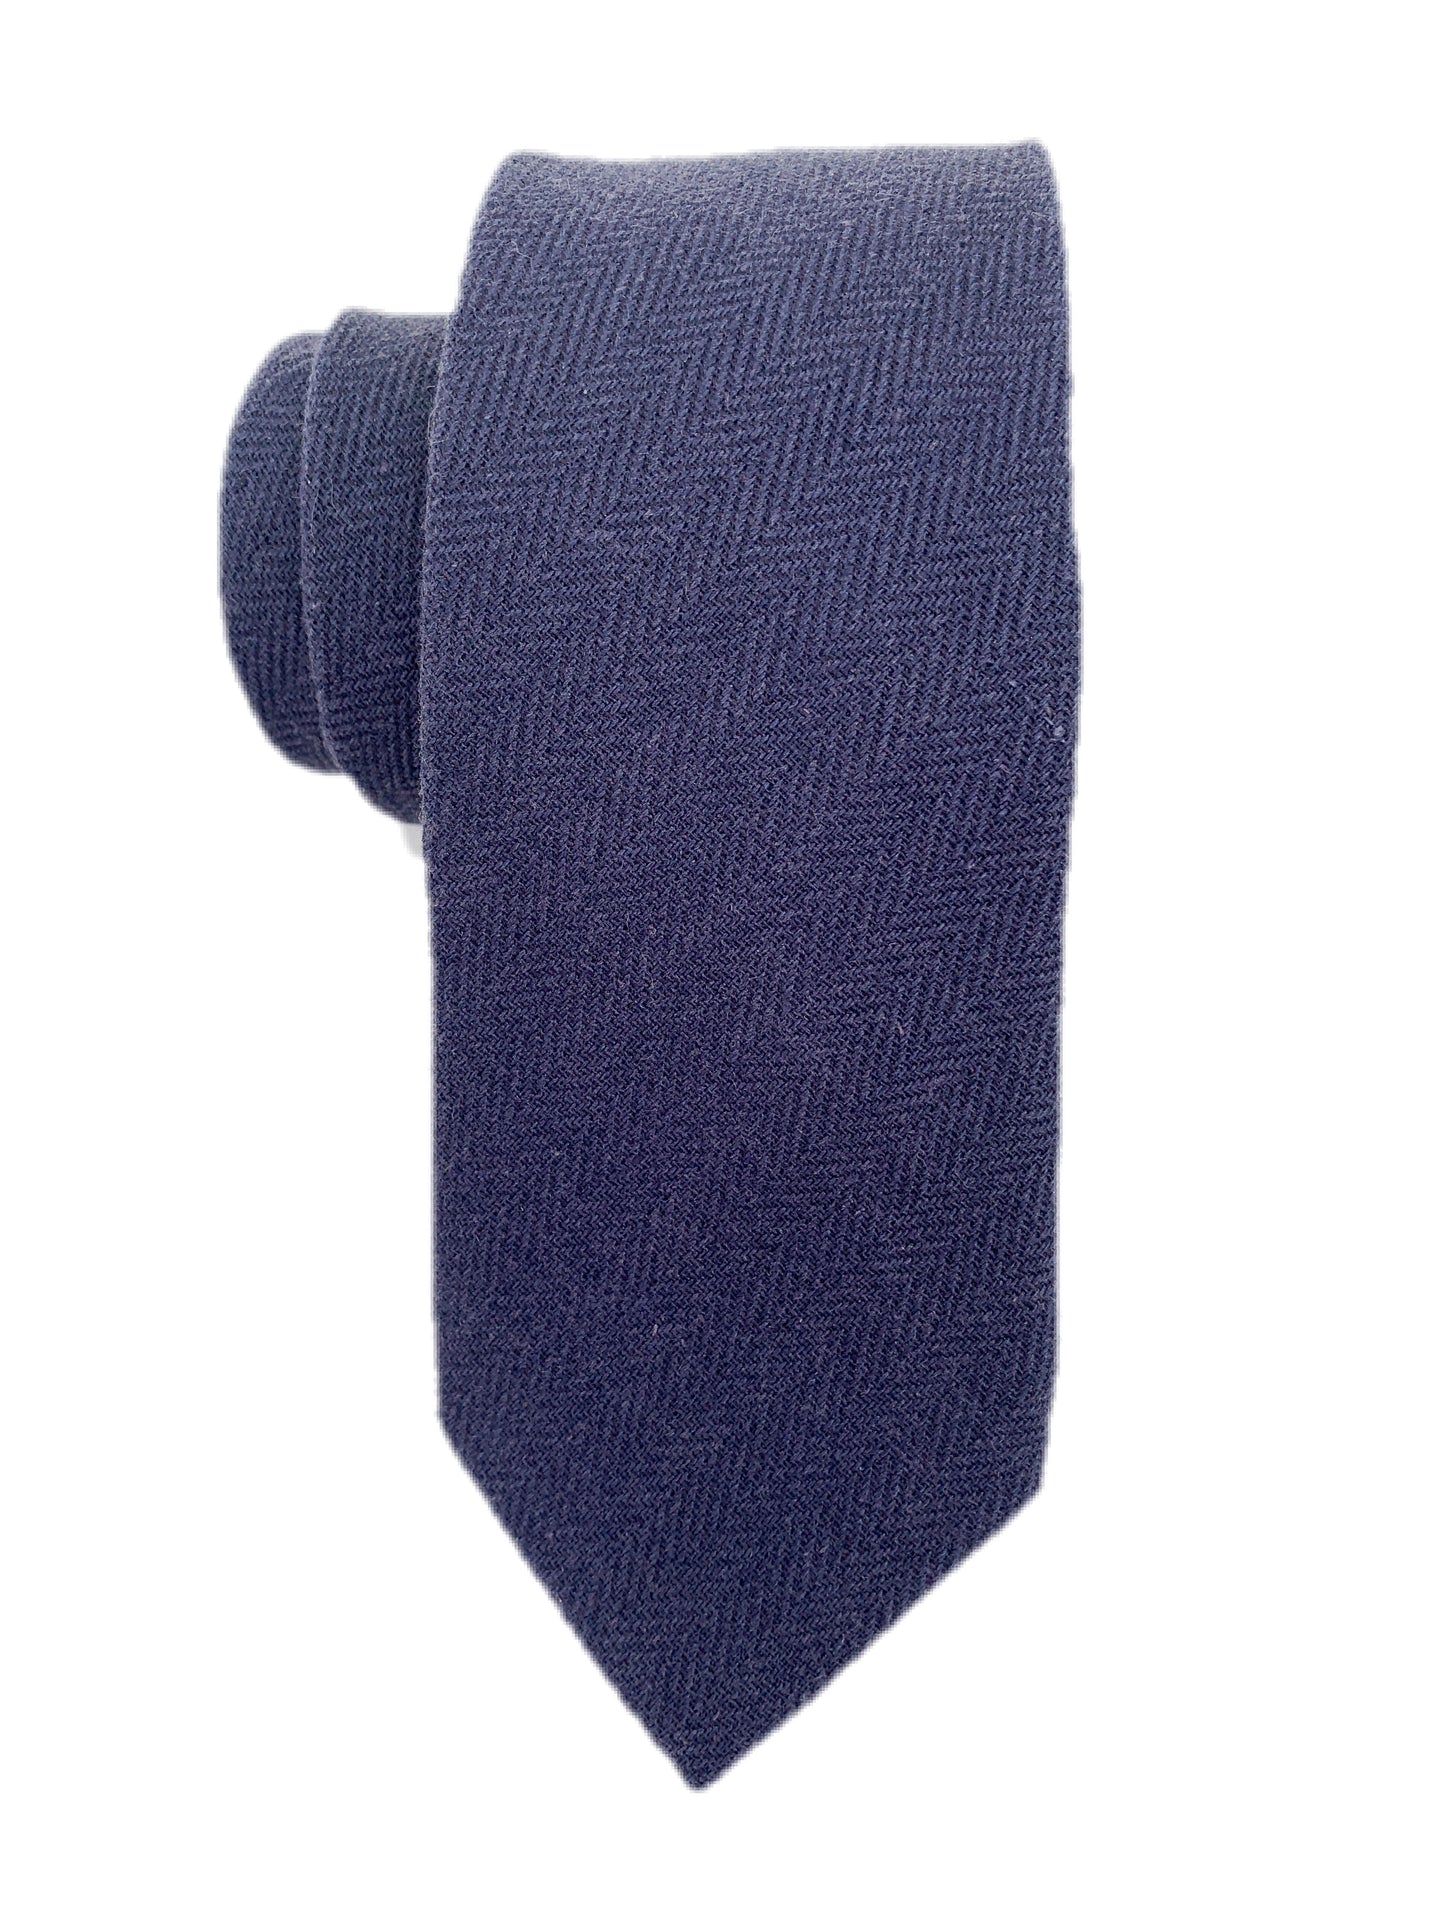 Palisades Navy Men's Tie